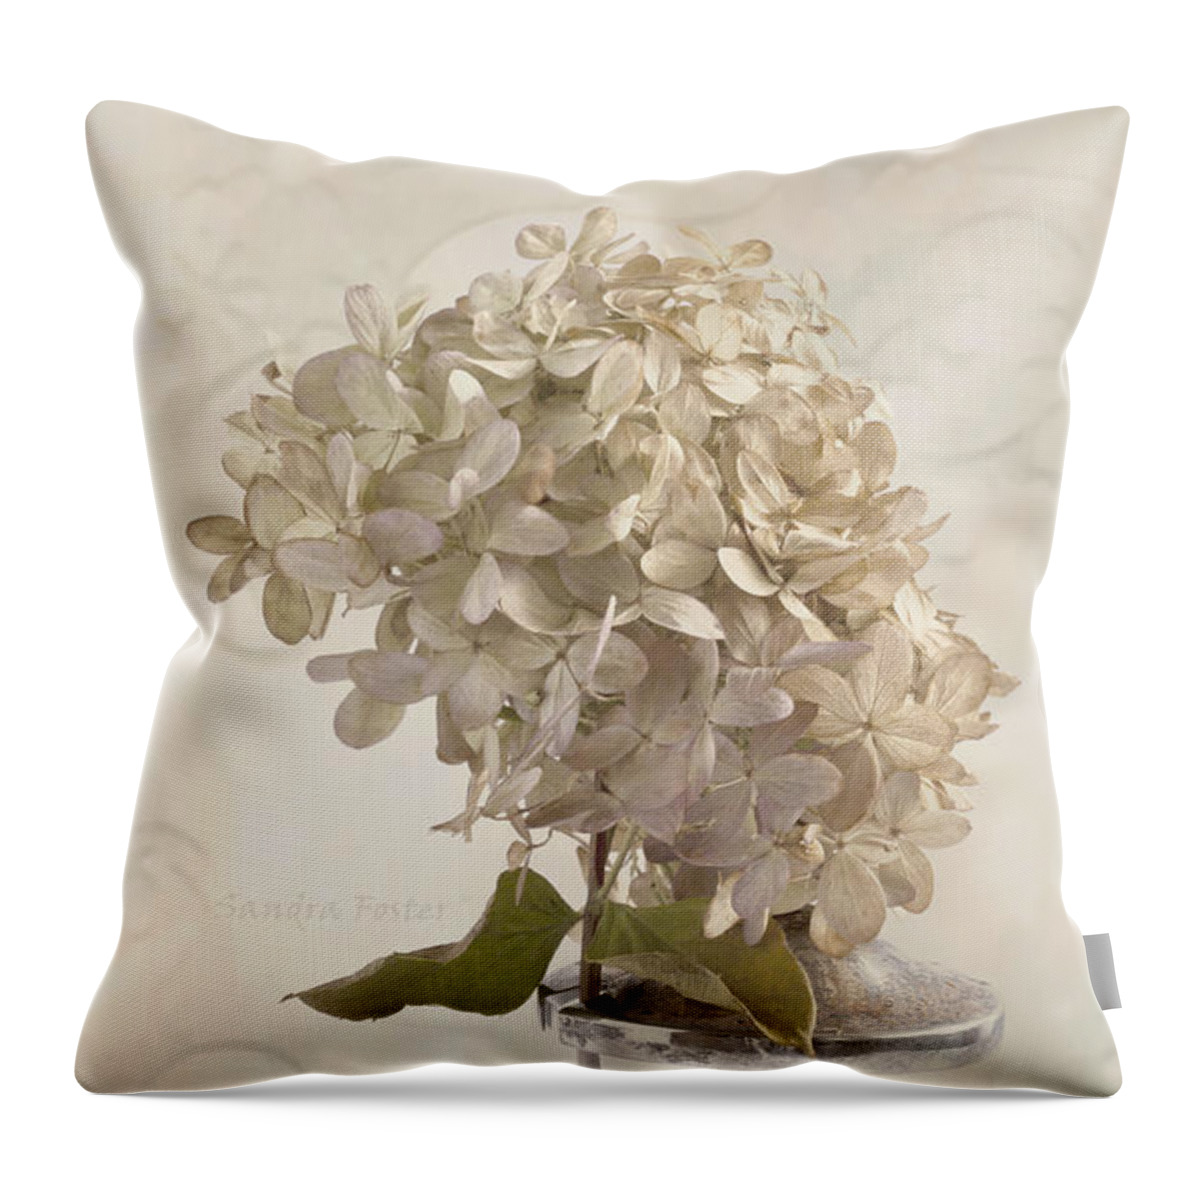 Hydrangea Throw Pillow featuring the photograph Hydrangea Softness by Sandra Foster